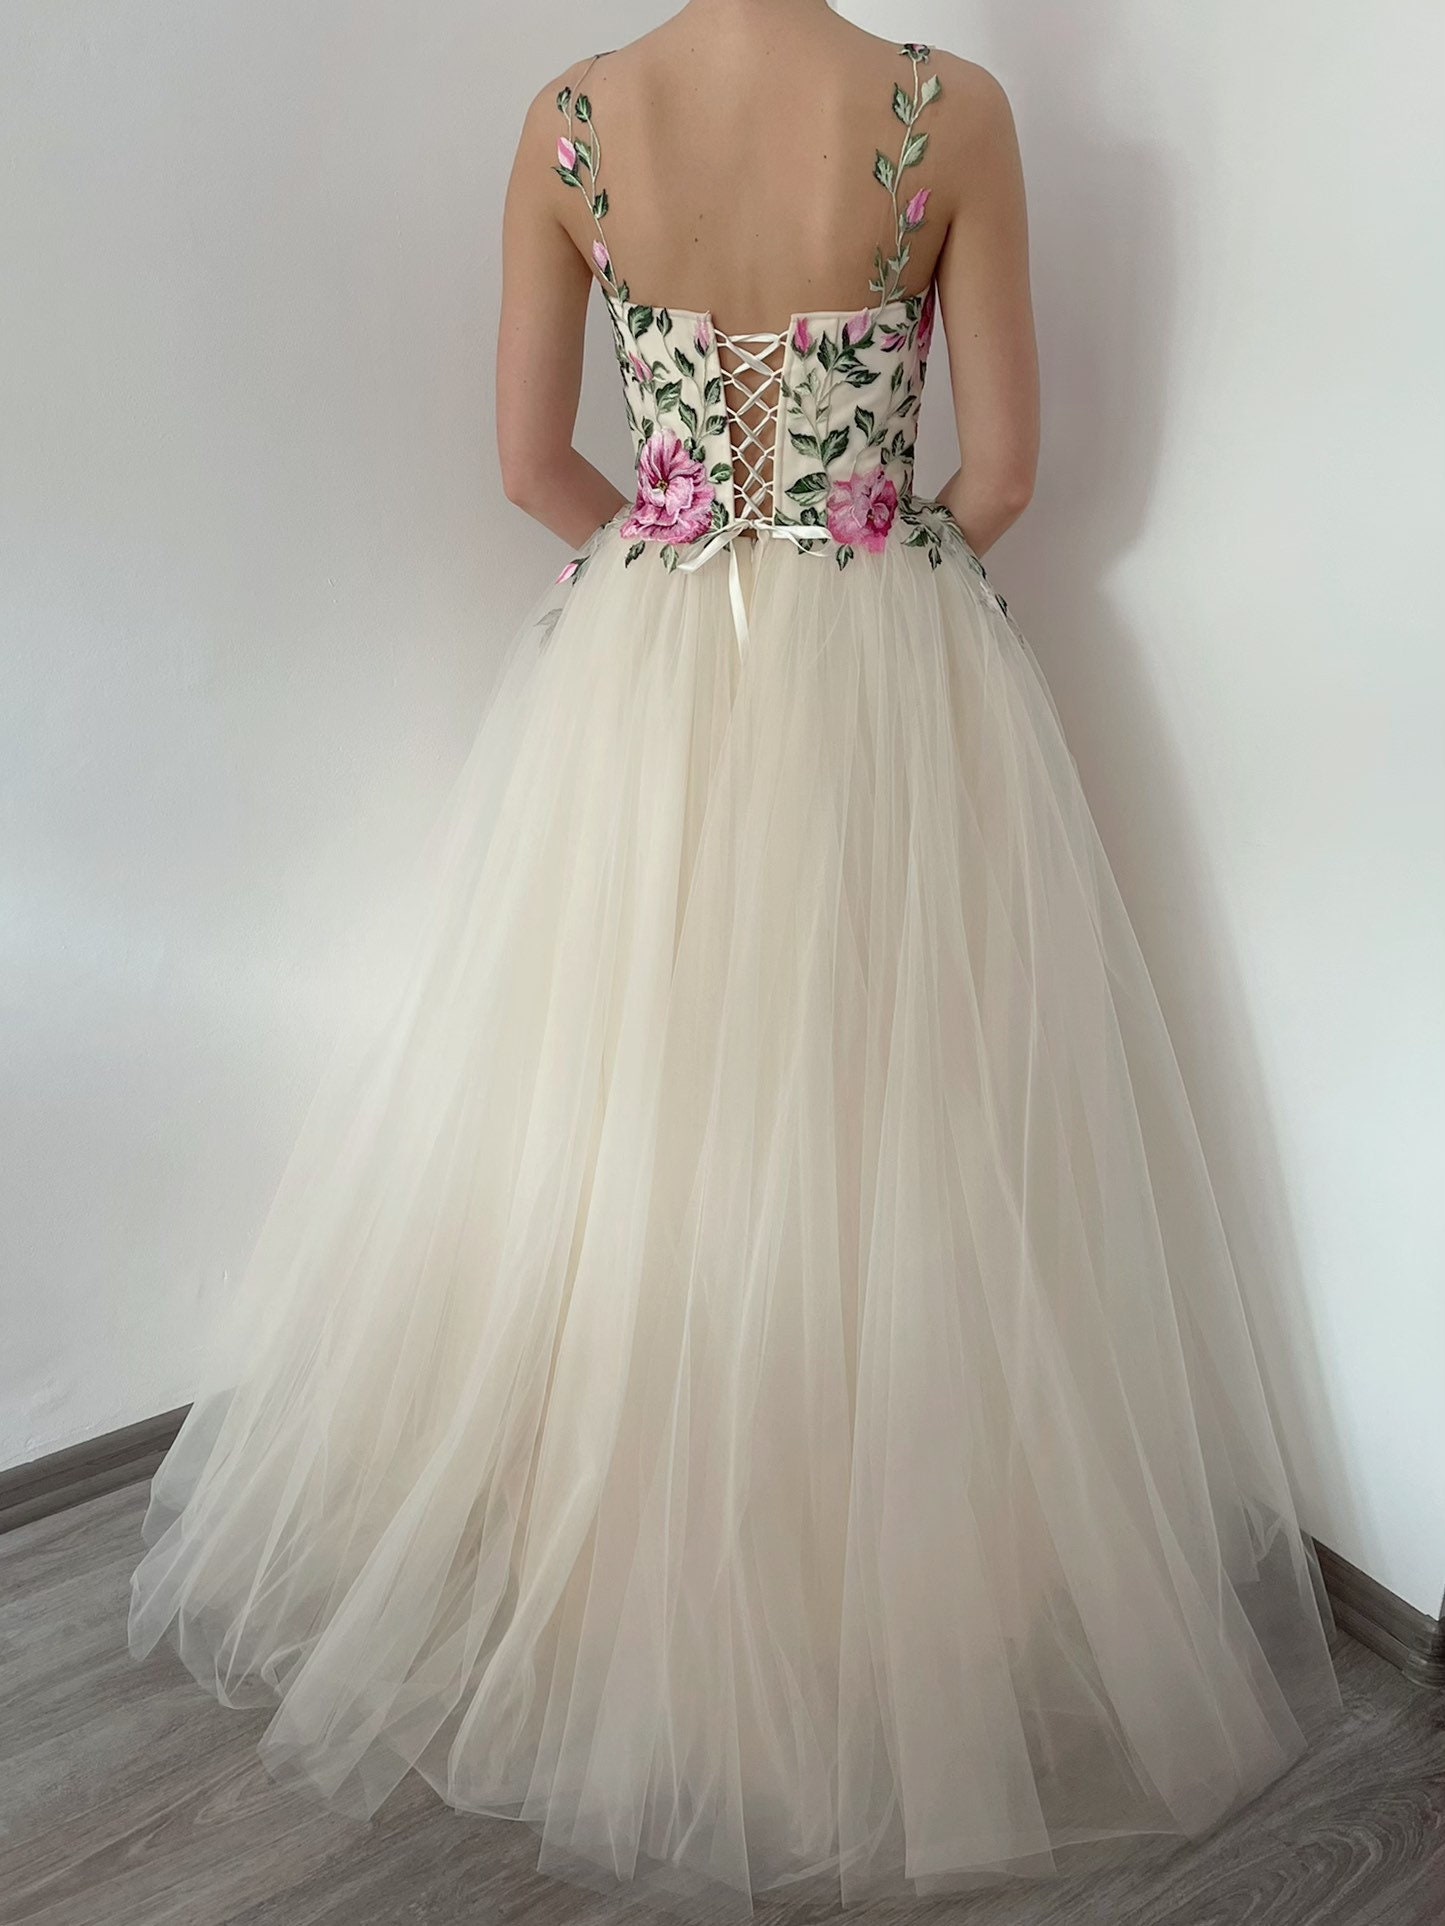 Champagne Tulle Pink Floral Corset Wedding Dress, Beige Fantasy Alternative  Summer Bride Gown, Romantic Pink Dress 